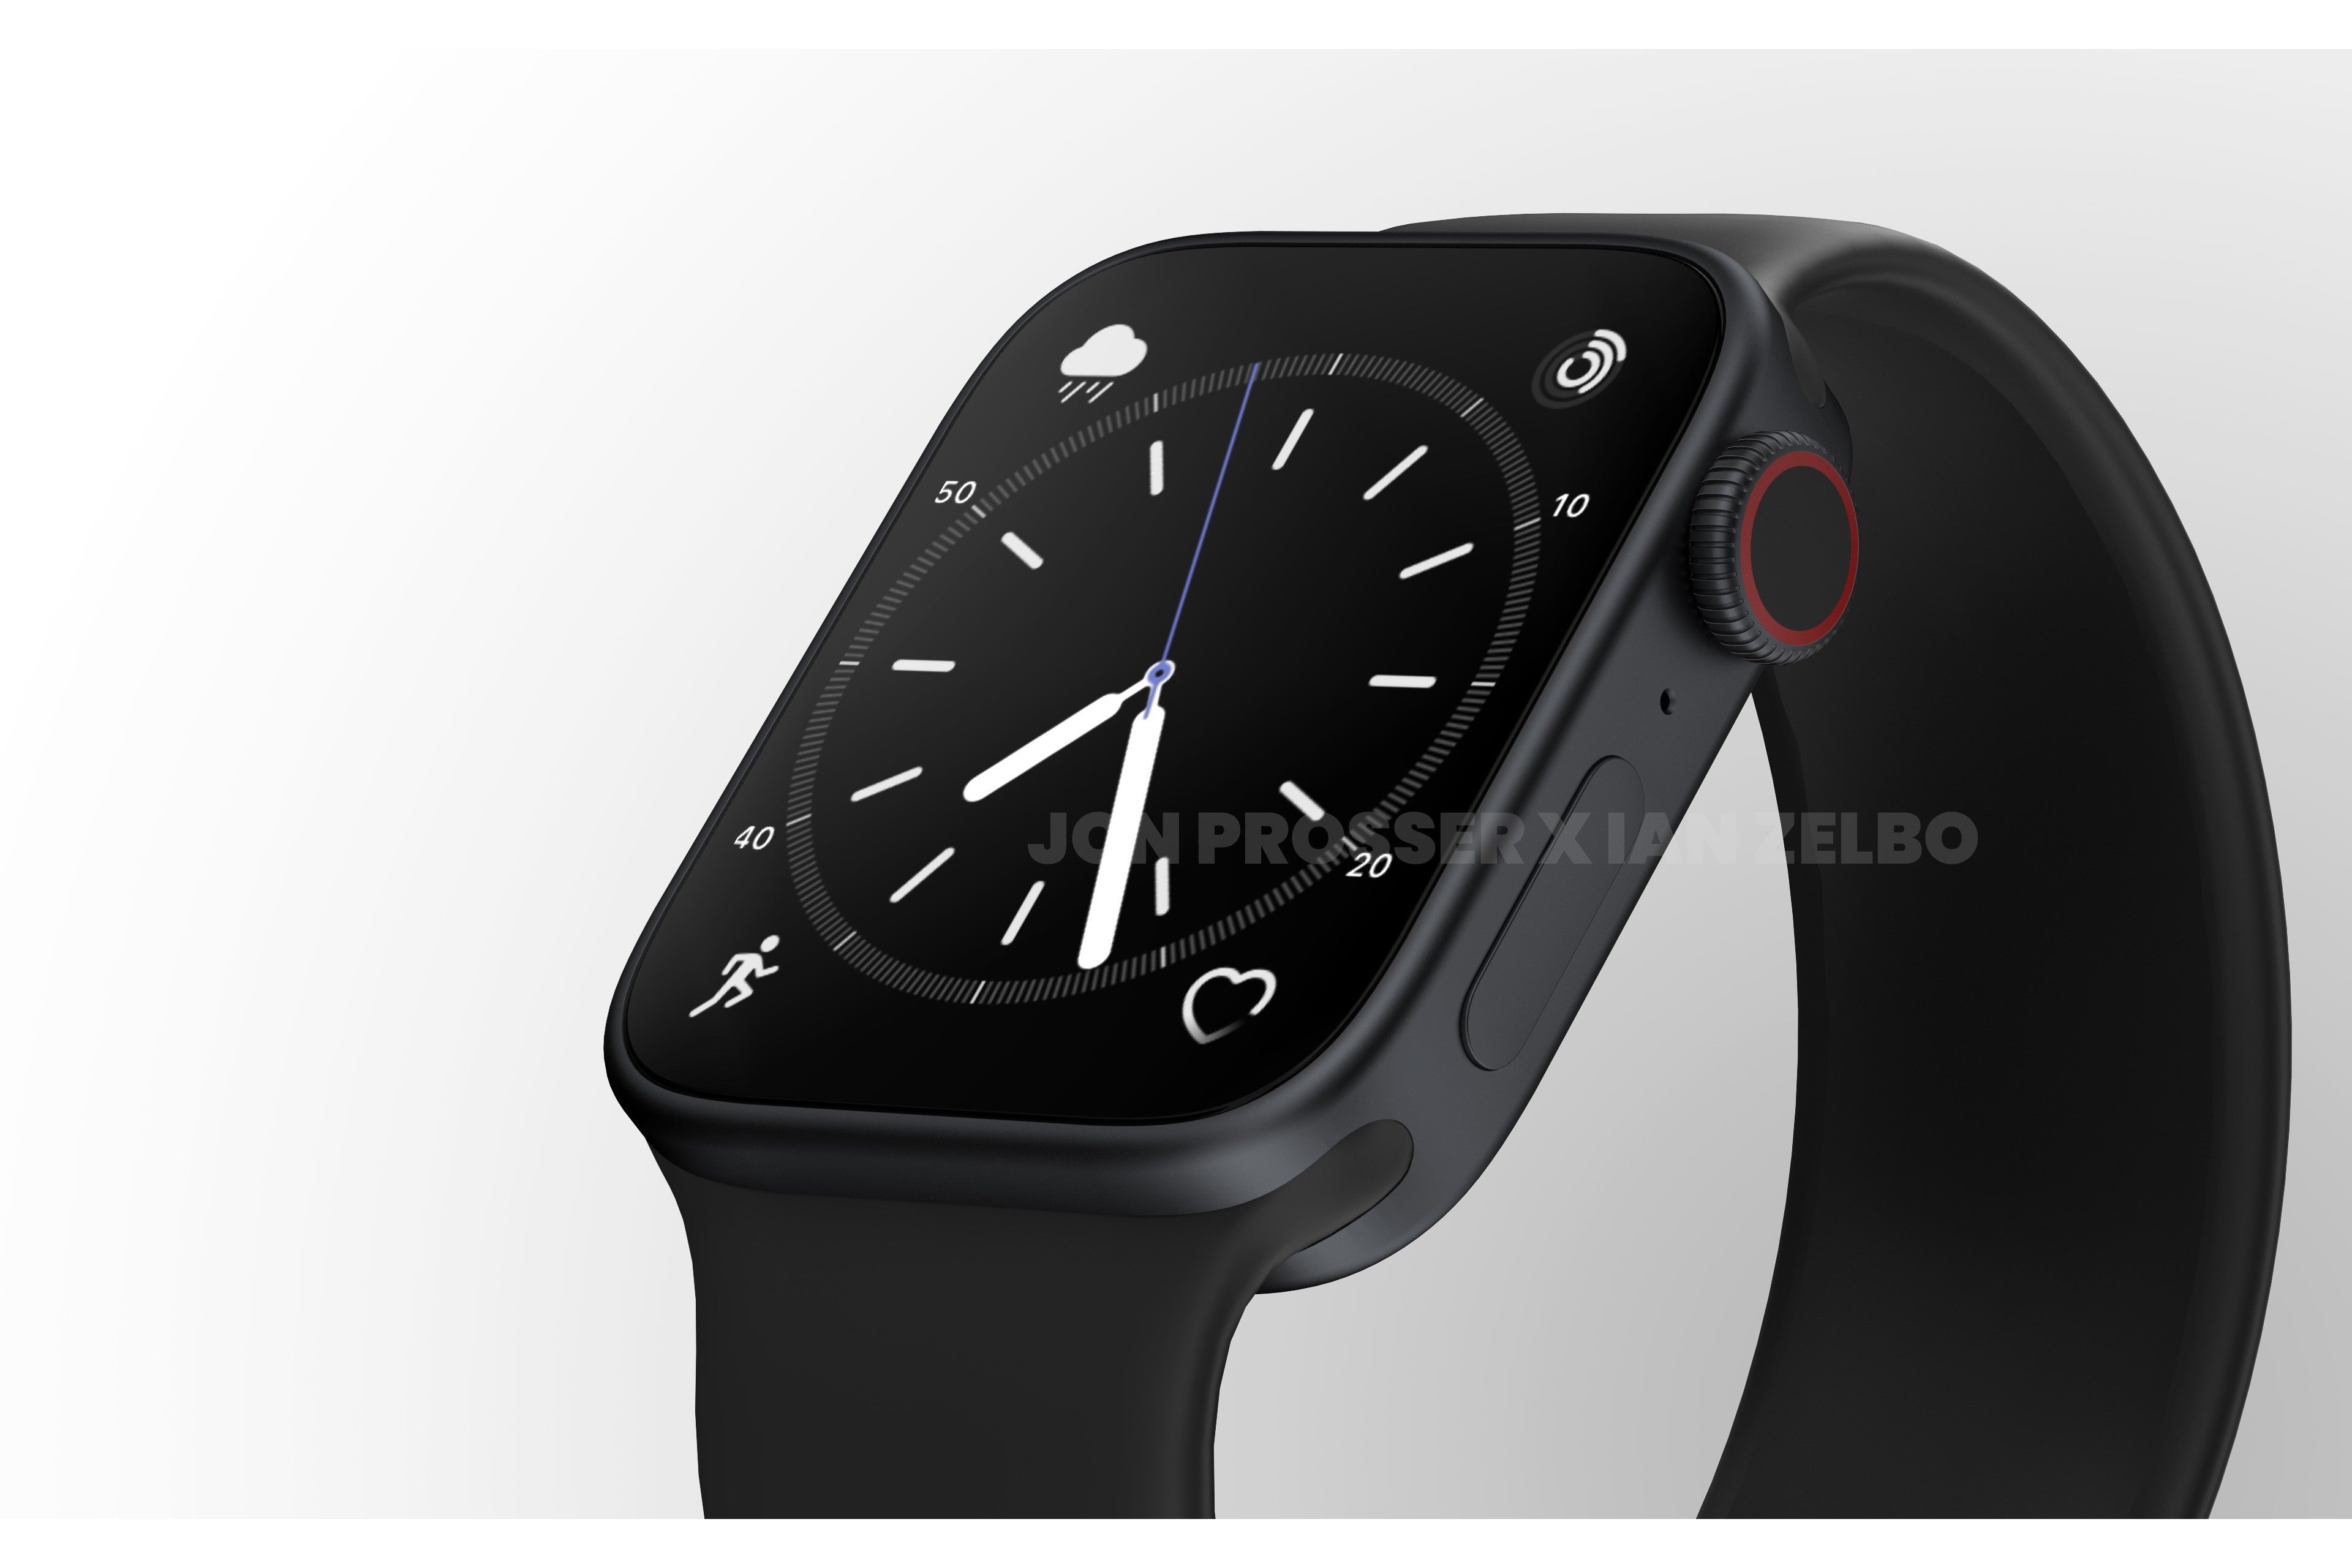 Leaked render showcases Apple Watch Series 8's flat screen - Leaked renders offer first look at redesigned Apple Watch Series 8